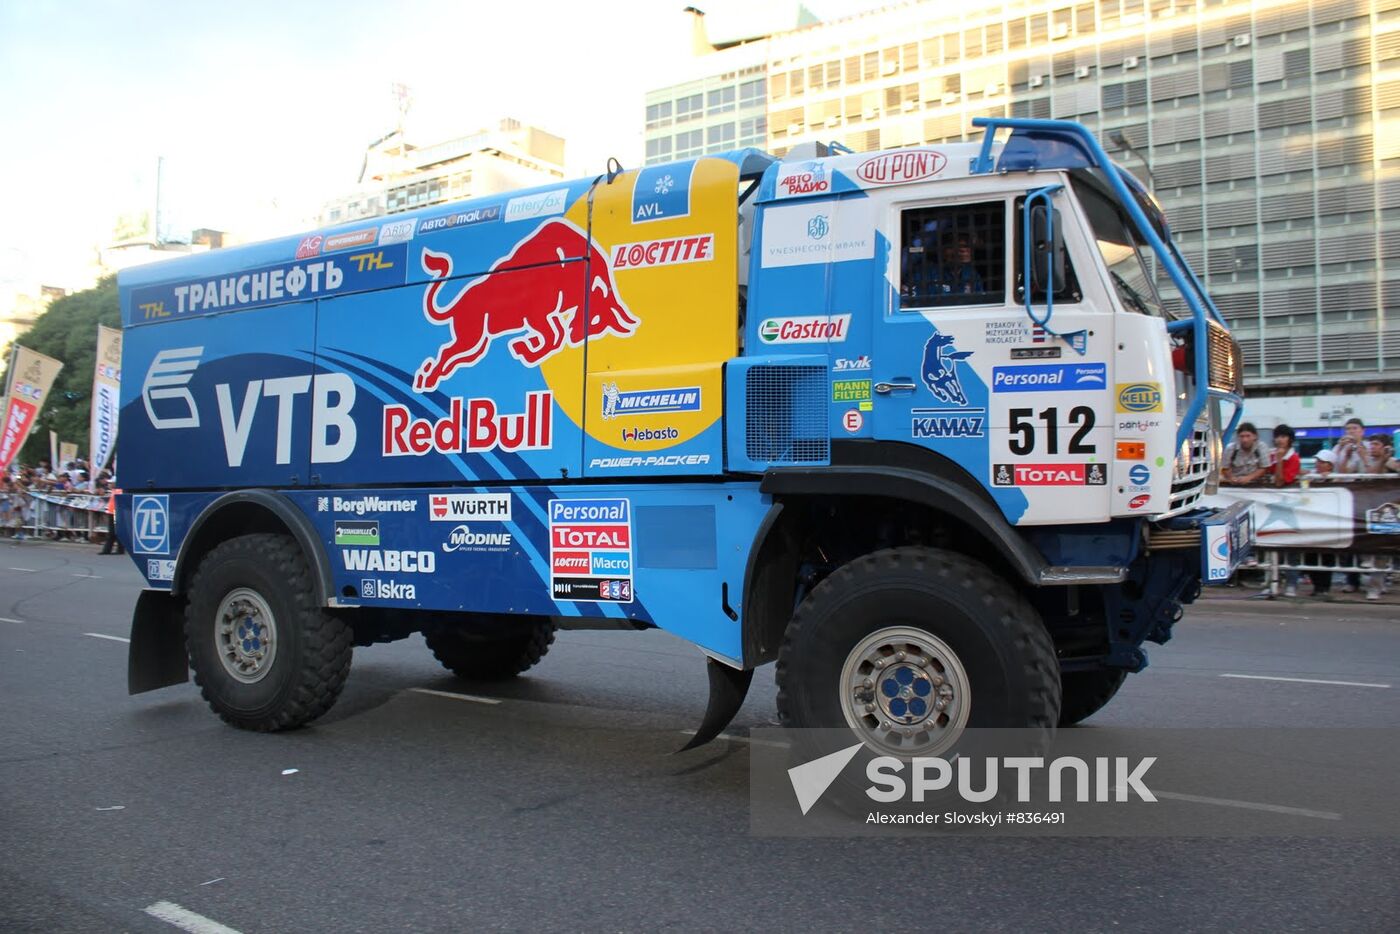 Dakar 2011 rally kicks off in Buenos Aires